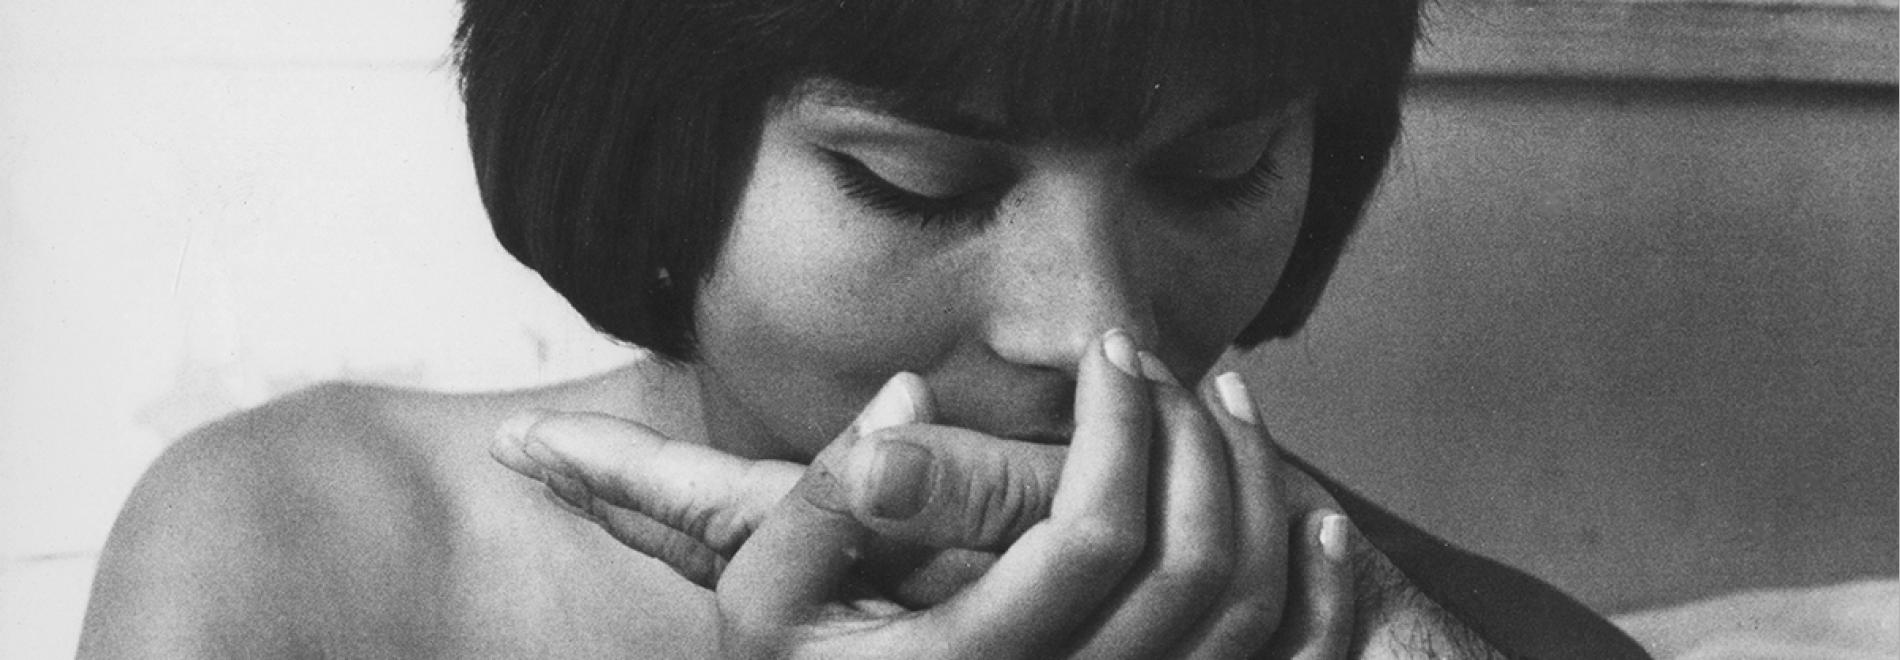 Une femme mariée (Jean-Luc Godard, 1964)